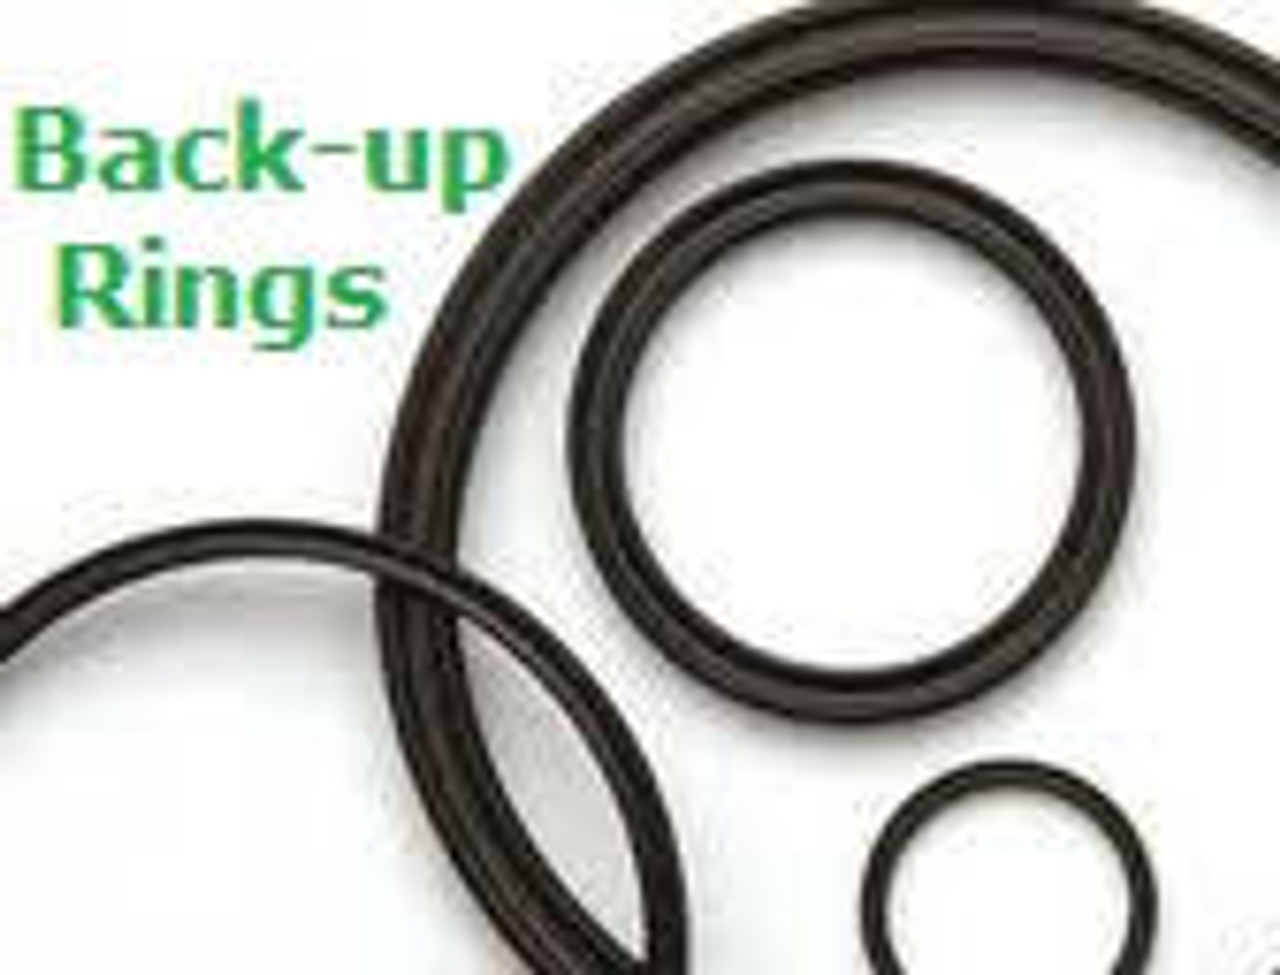 Backup Rings  Buna Size 115   Minimum 20 pcs